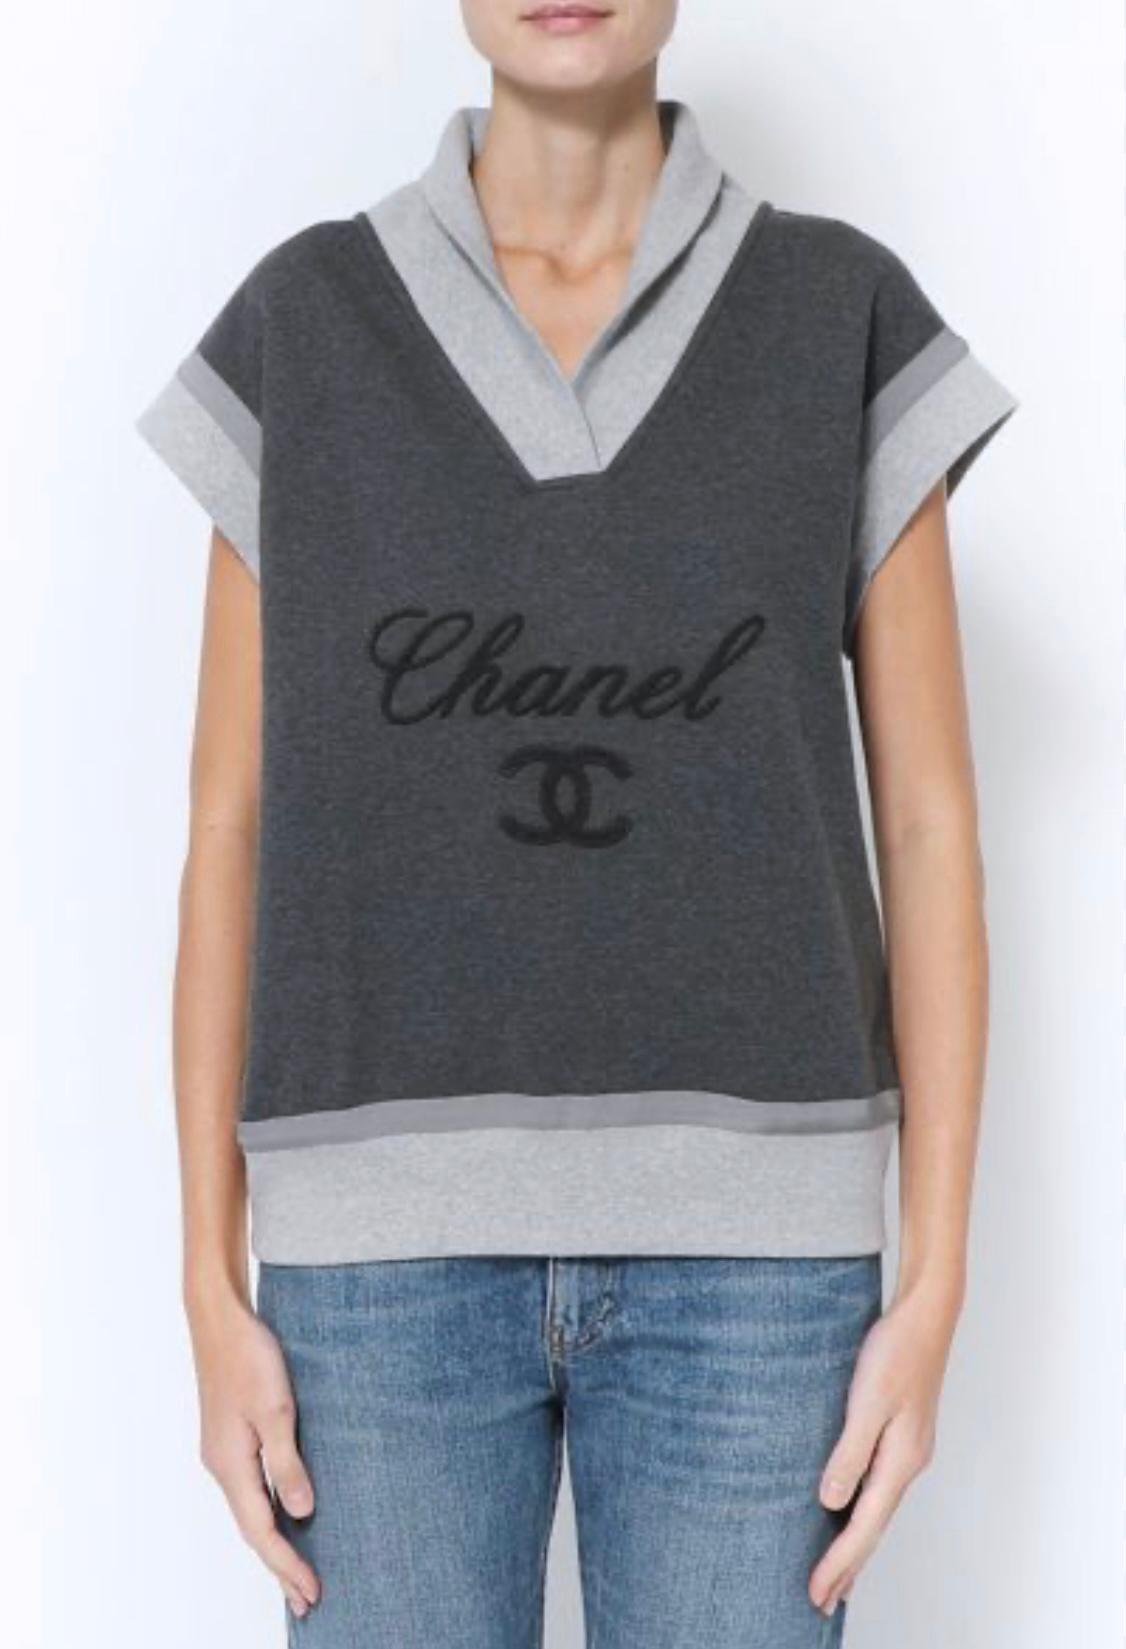 New Chanel super stylish grey vest with CC 'Chanel' logo at front
Taille 36 FR. Jamais porté.